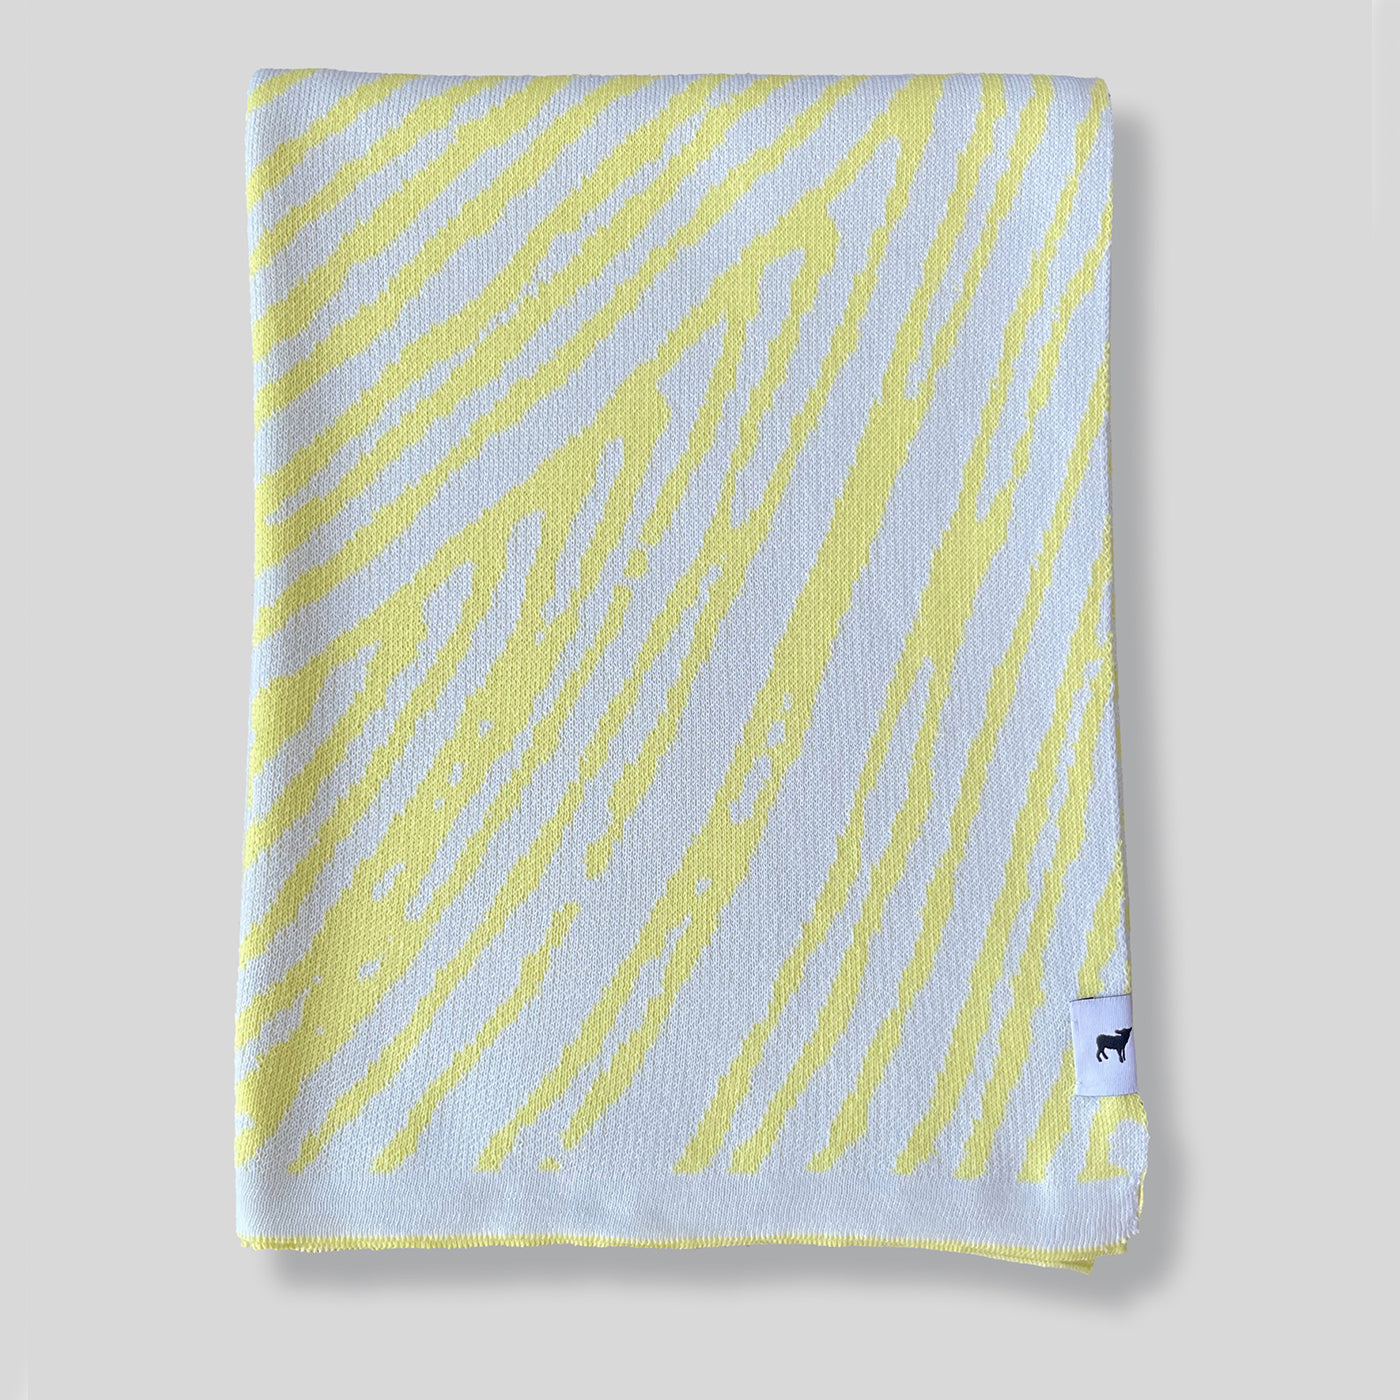 Tratto Bio Neon-Yellow & White Blanket by Emilio Salvatore Leo - Alternative view 5